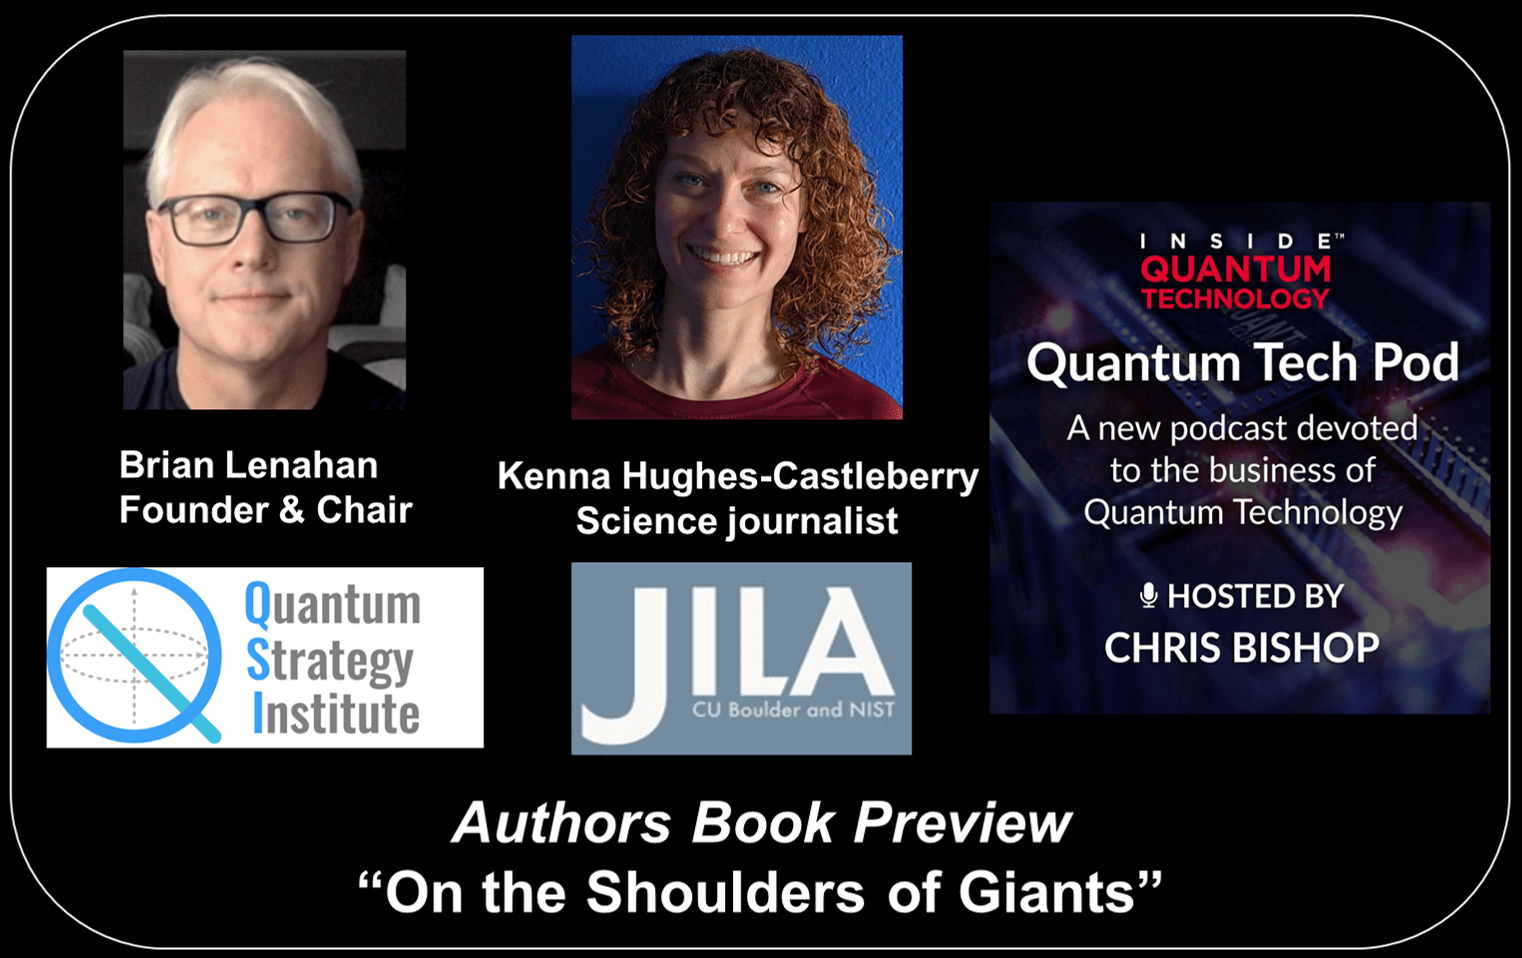 Quantum Tech Pod Episode 47: Brian Lenahan & Kenna Hughes-Castleberry Membahas Buku Mereka 'On the Shoulders of Giants'